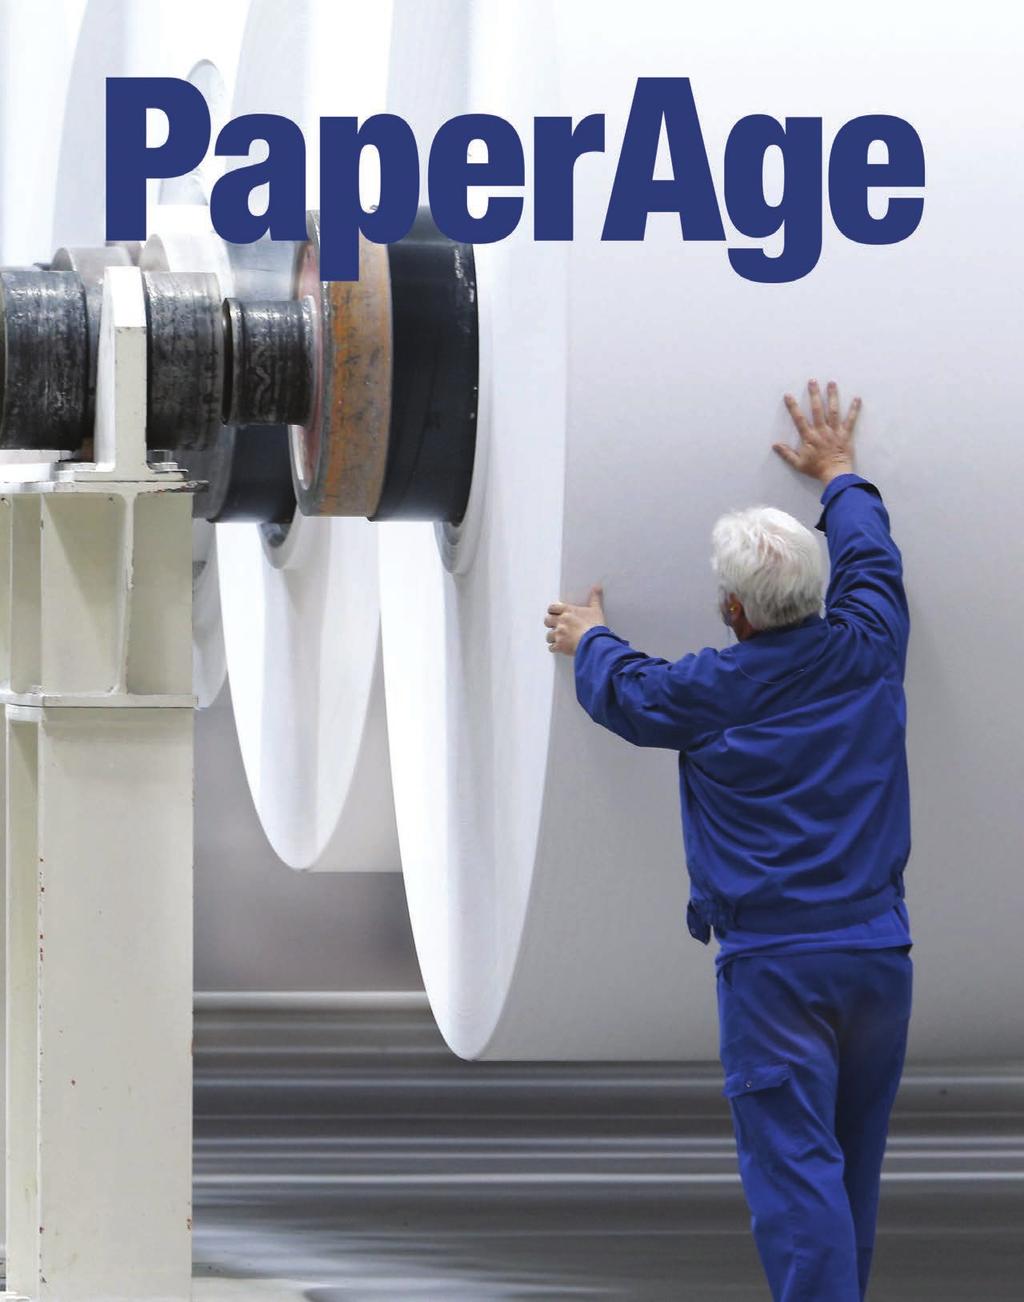 www.paperage.